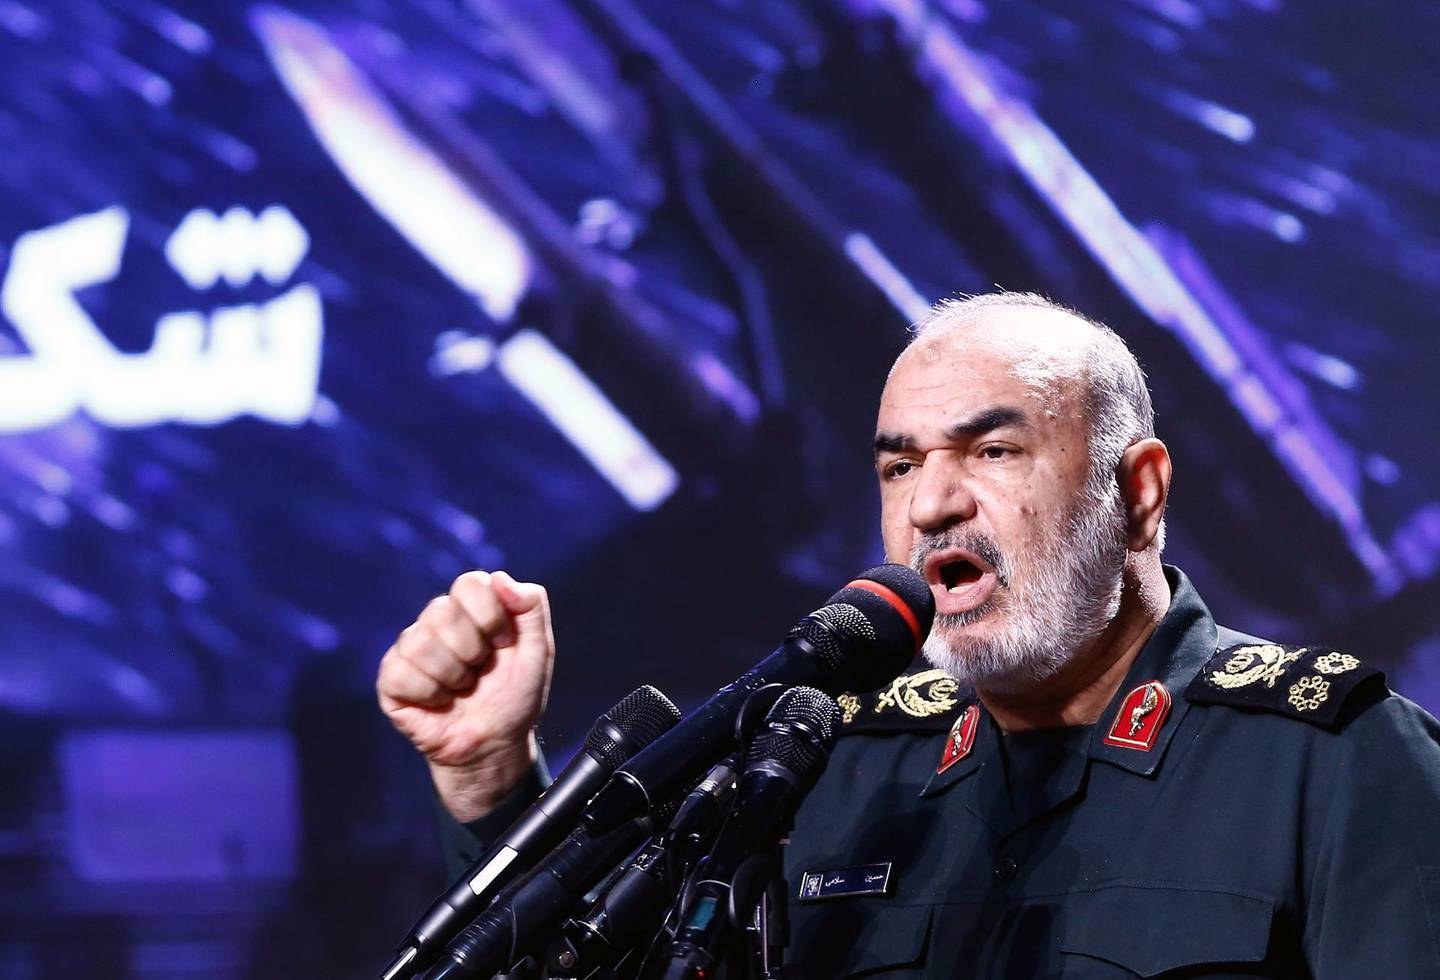 epa07858484 Iran's Revolutionary Guard Corps (IRGC) chief commander Hossein Salami speaks during a ceremony at the Tehran's defense museum, in Tehran, Iran, 21 September 2019.  EPA/ABEDIN TAHERKENAREH